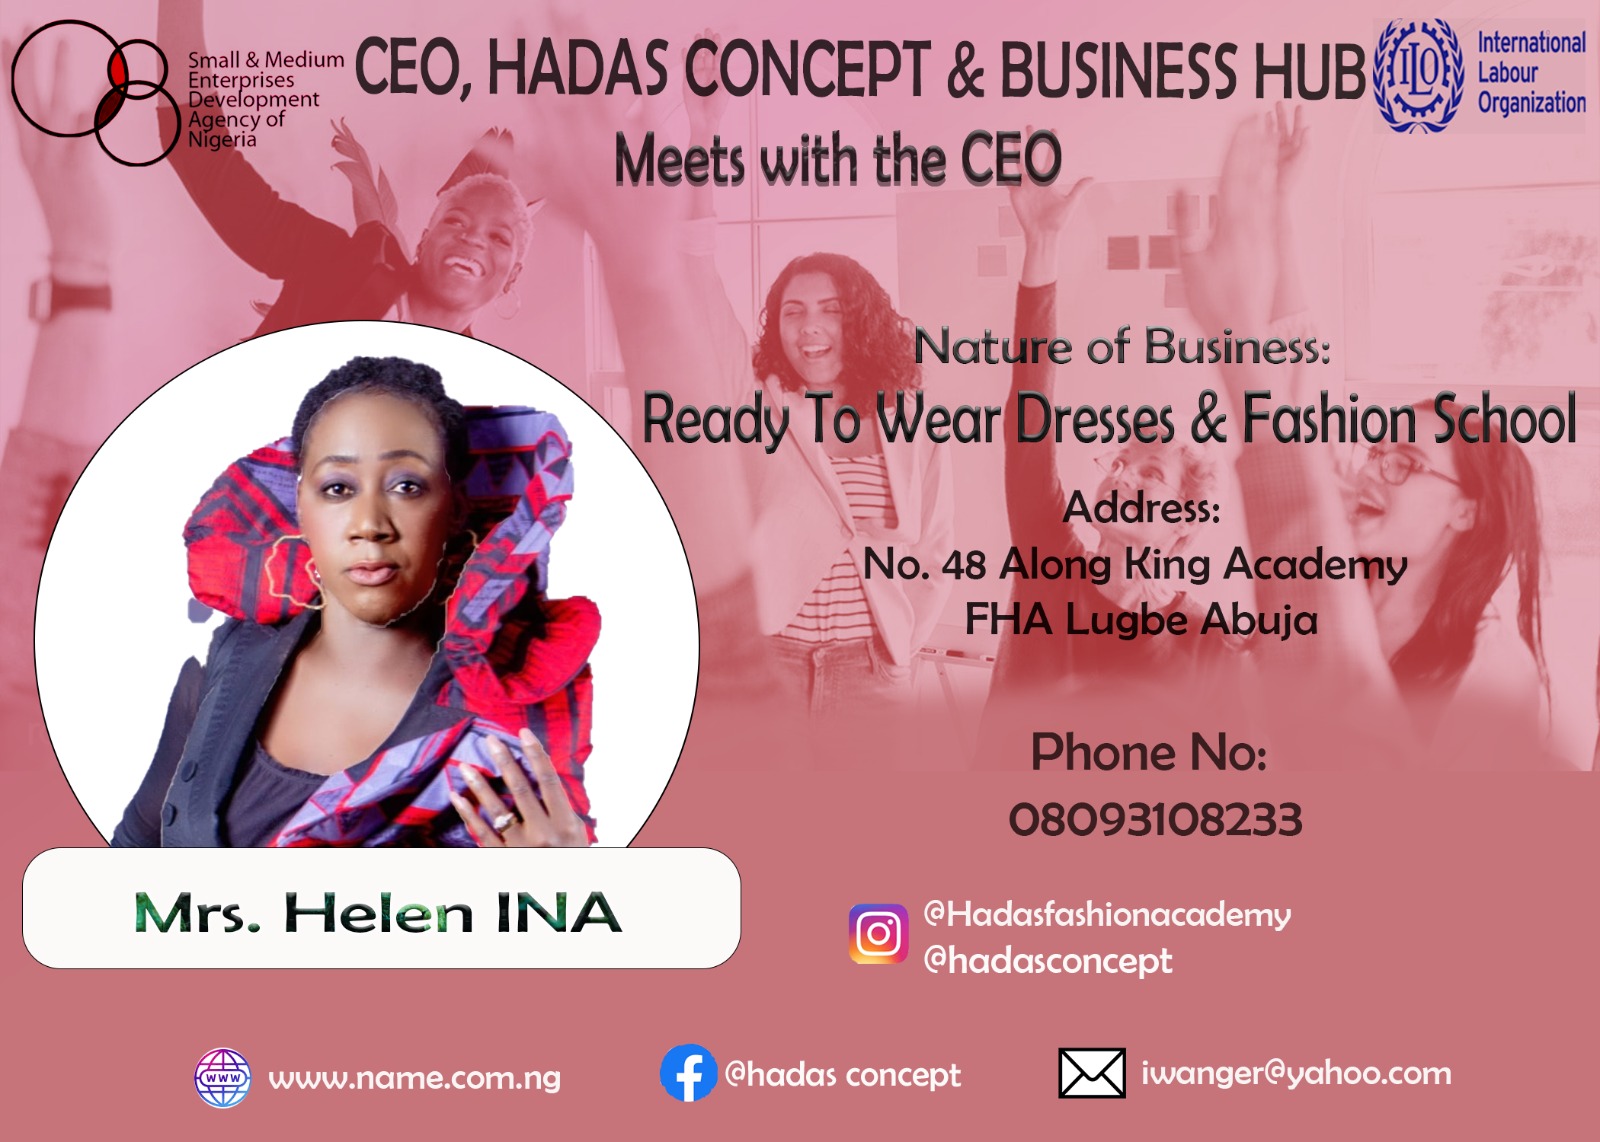 HADAS CONCEPT & BUSINESS HUB